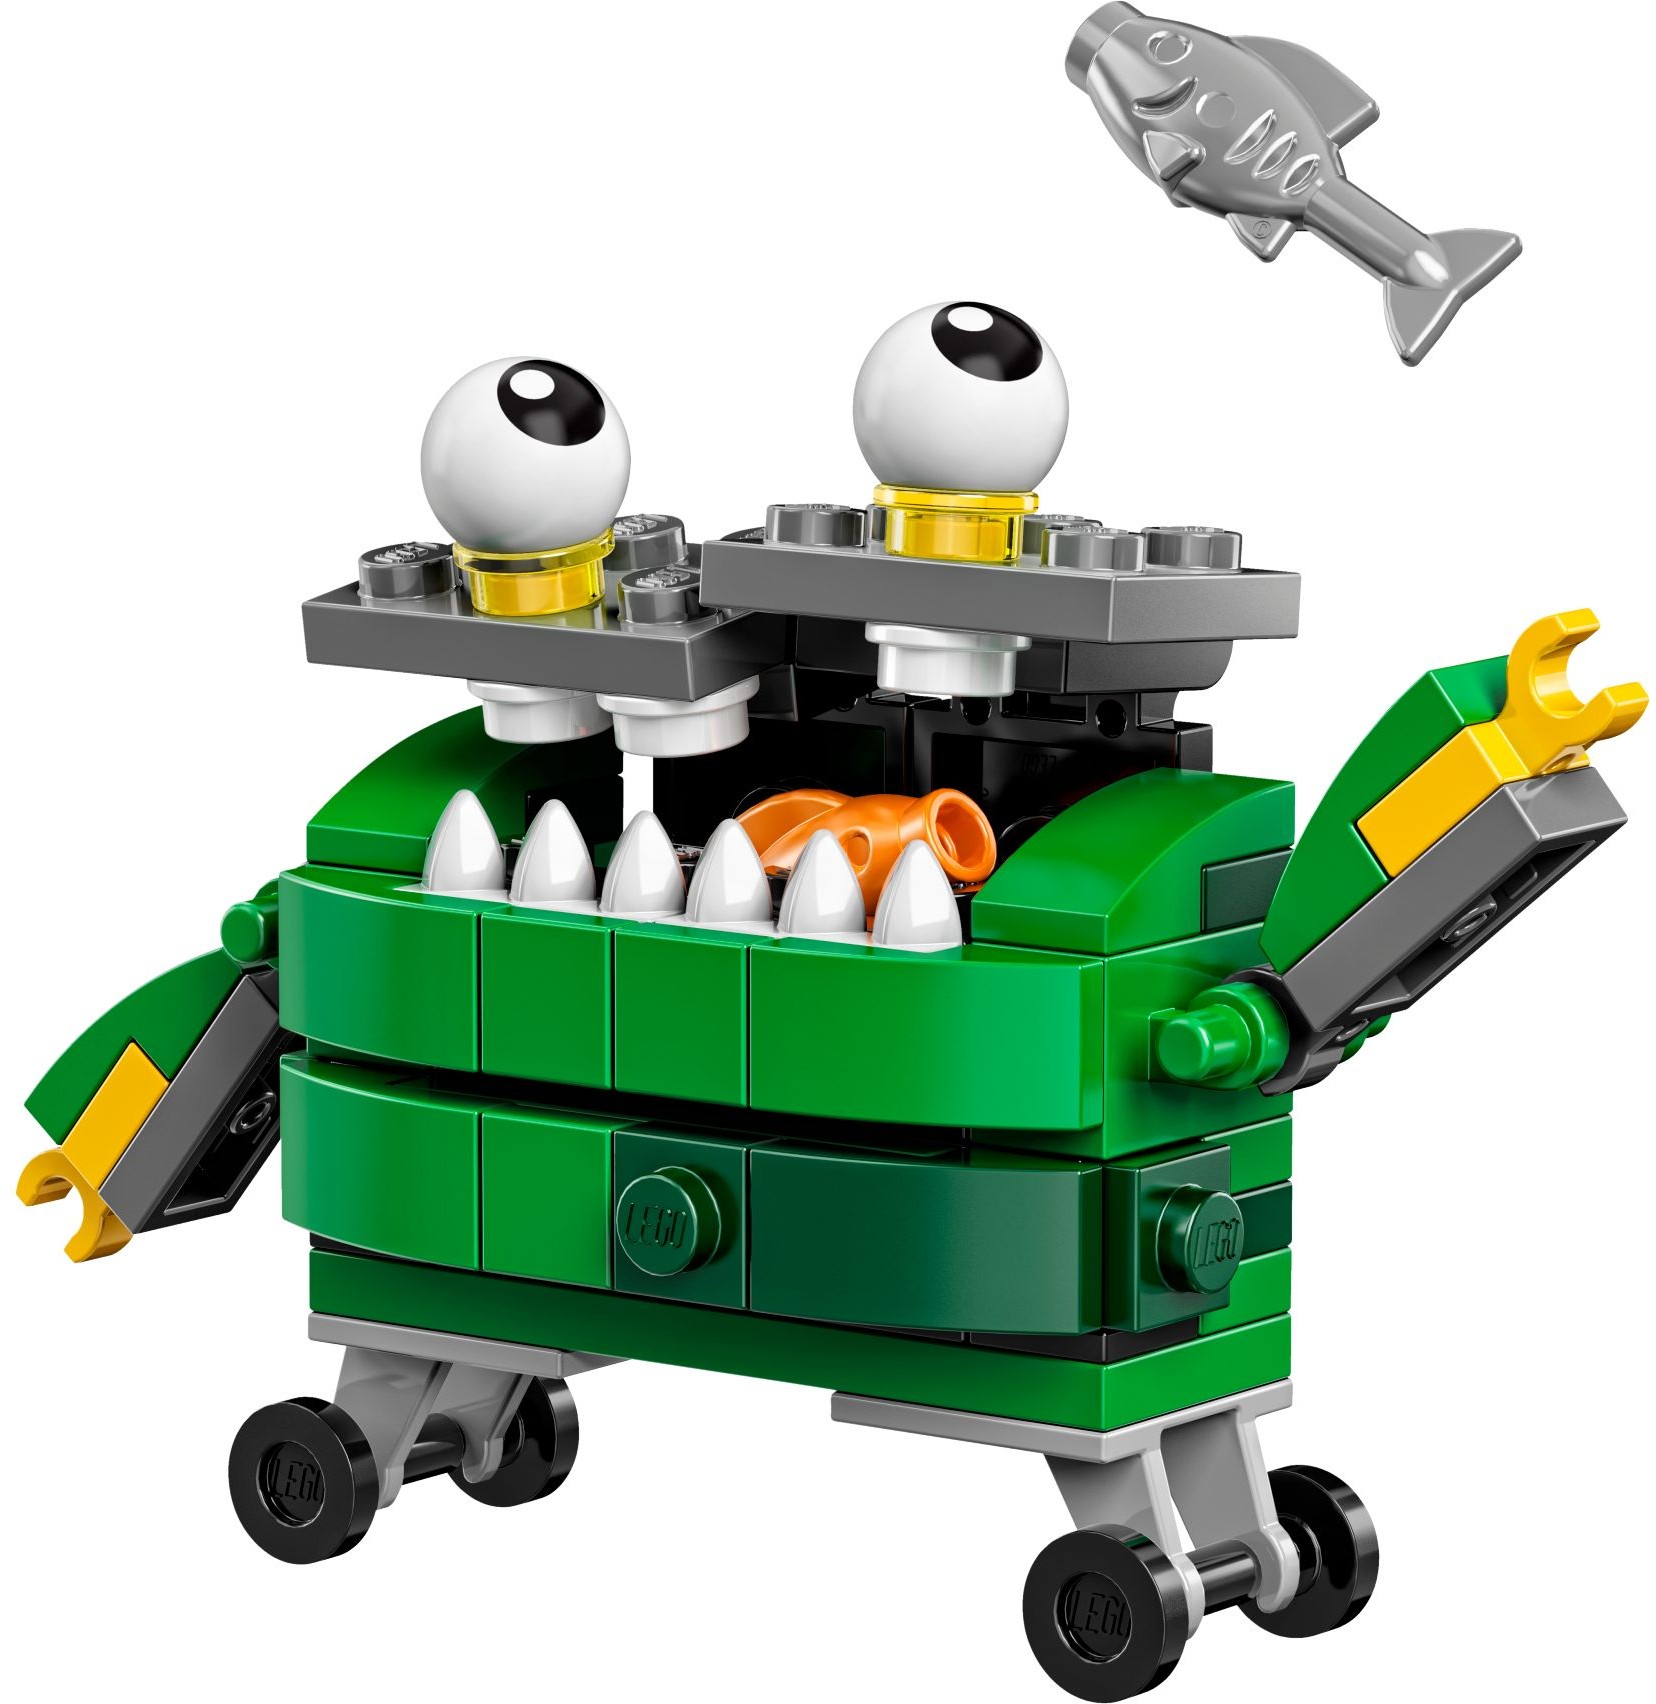 Mixels | Series 9 | Brickset: LEGO guide database